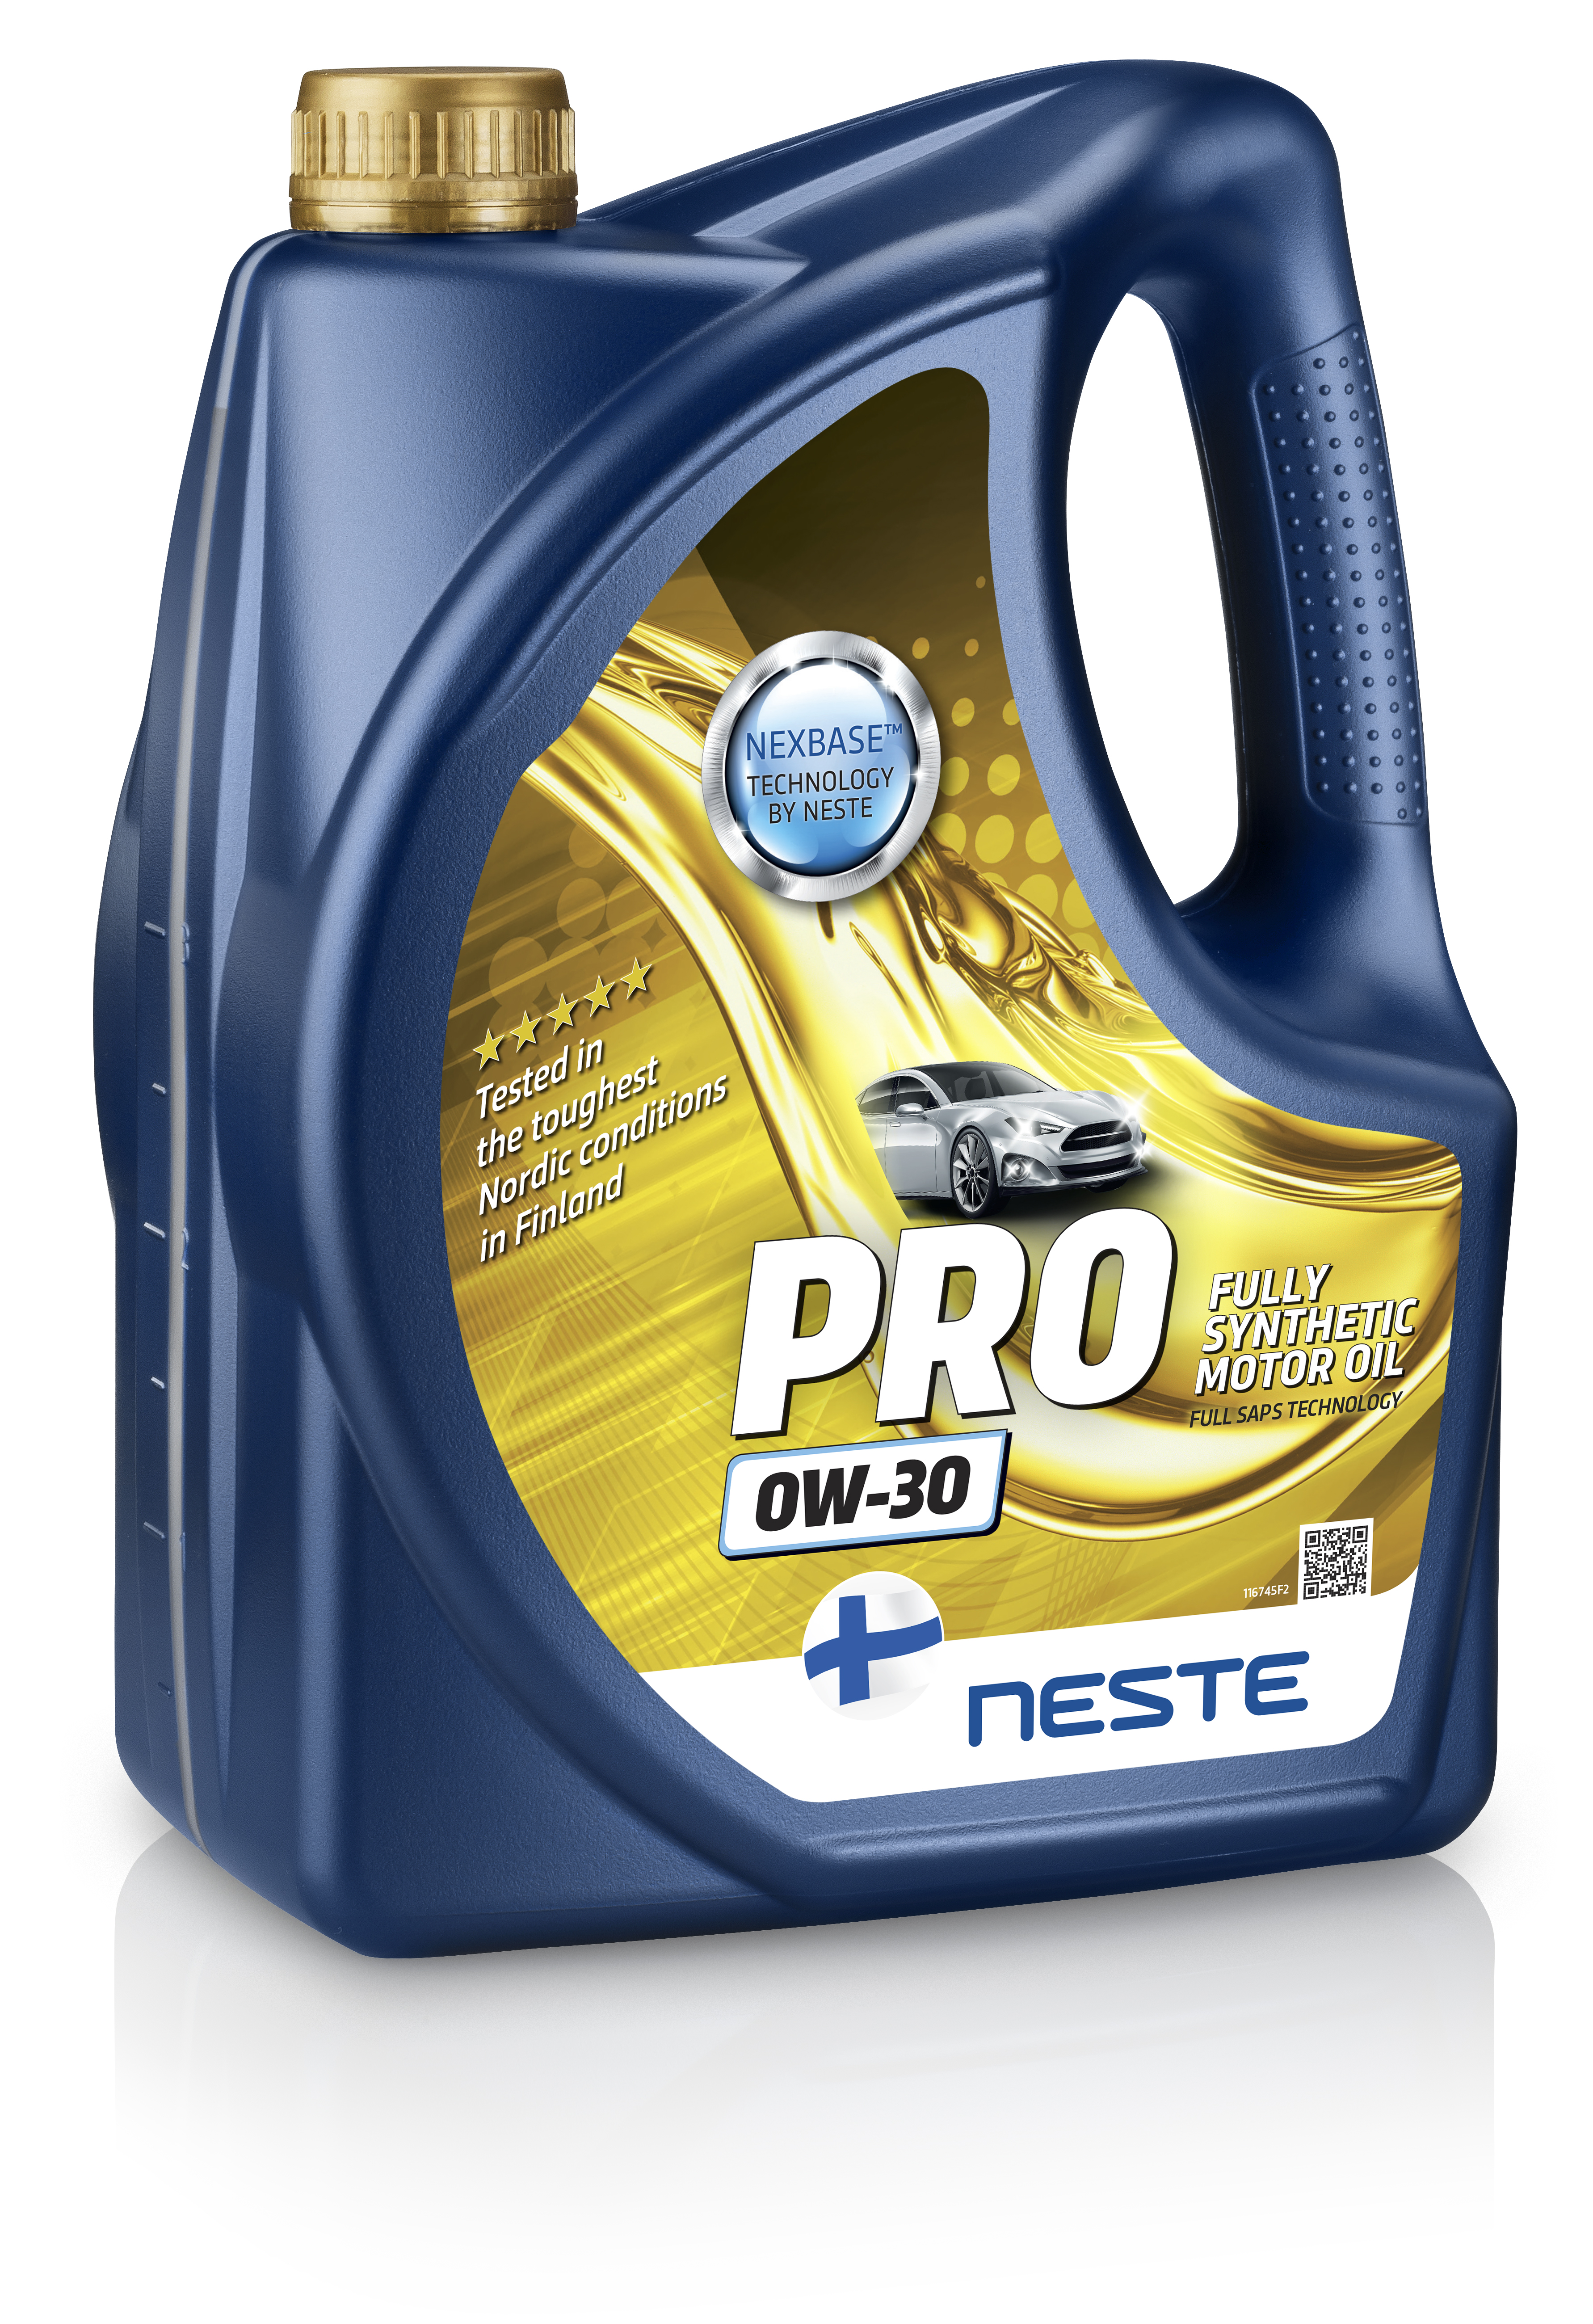 Neste atf multi. Neste 0w20 Pro v. Neste Pro dg2 5w-30. Neste 5w40 Premium+ артикул. Neste Premium+ 5w-40.